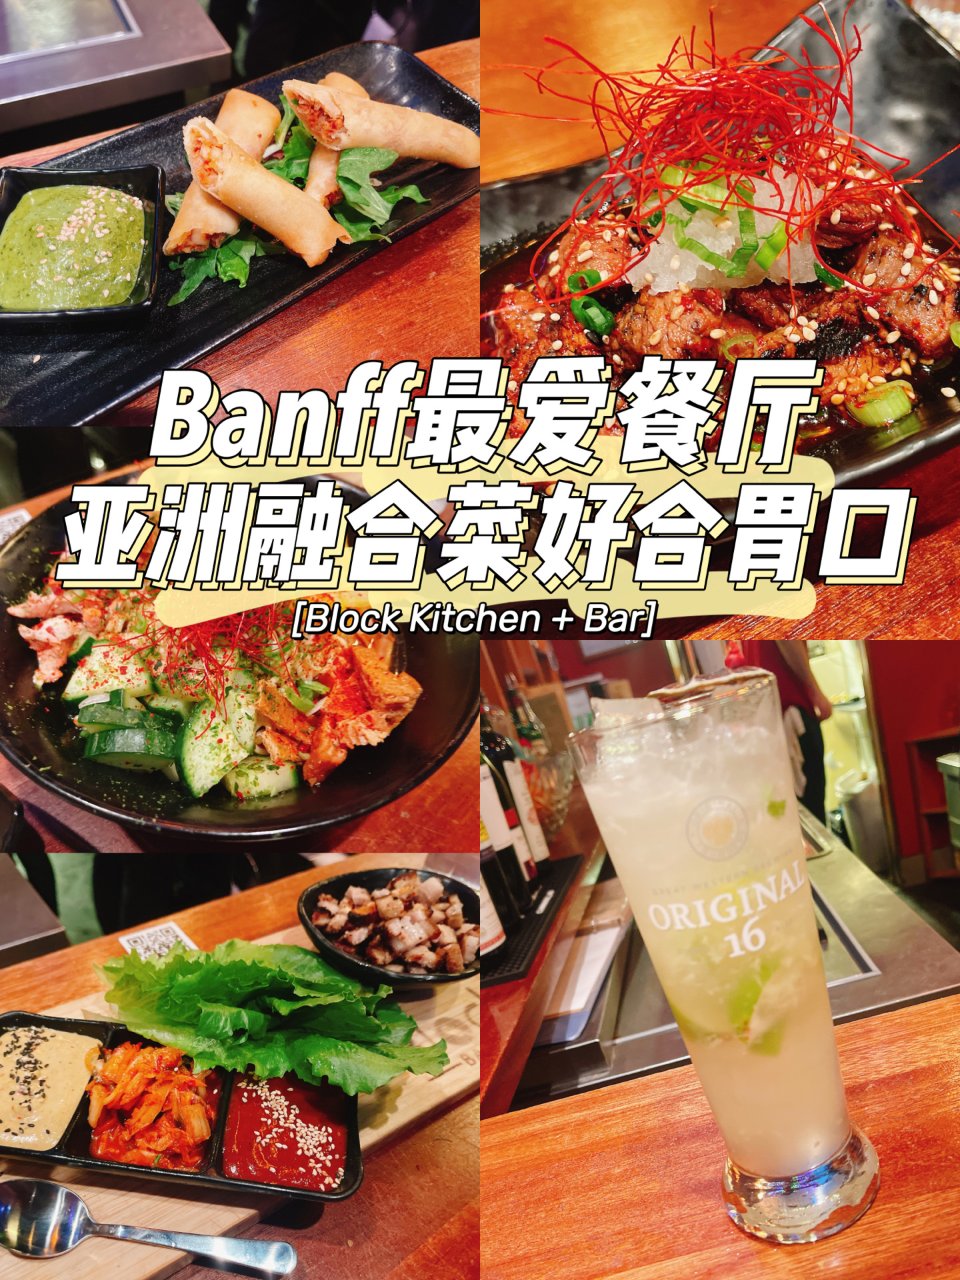 Banff美食｜最爱餐厅 亚洲融合菜好合...